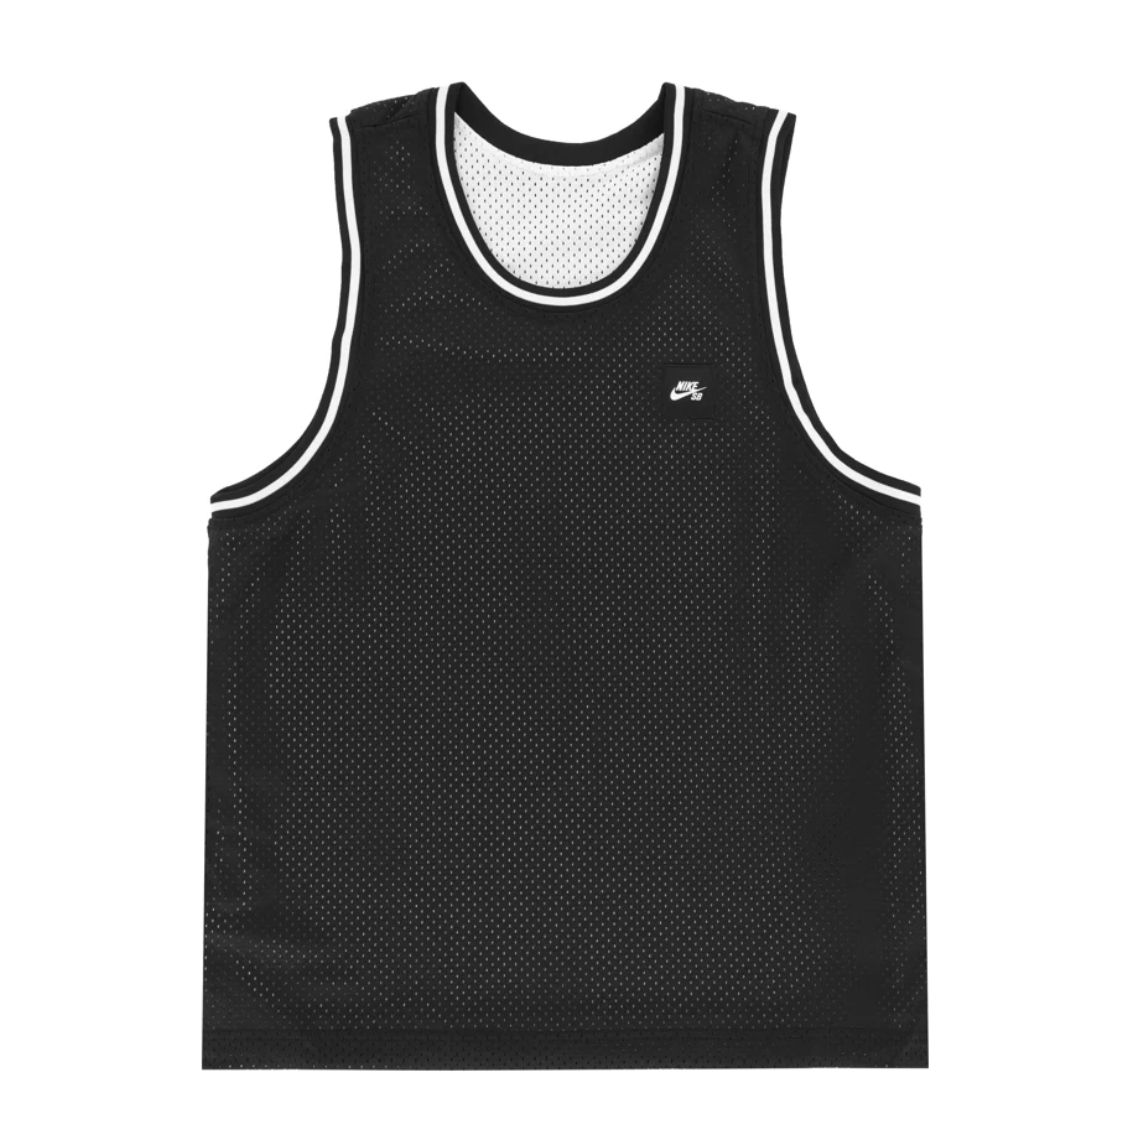 Nike SB Skate Basketball Jersey - Black/ White